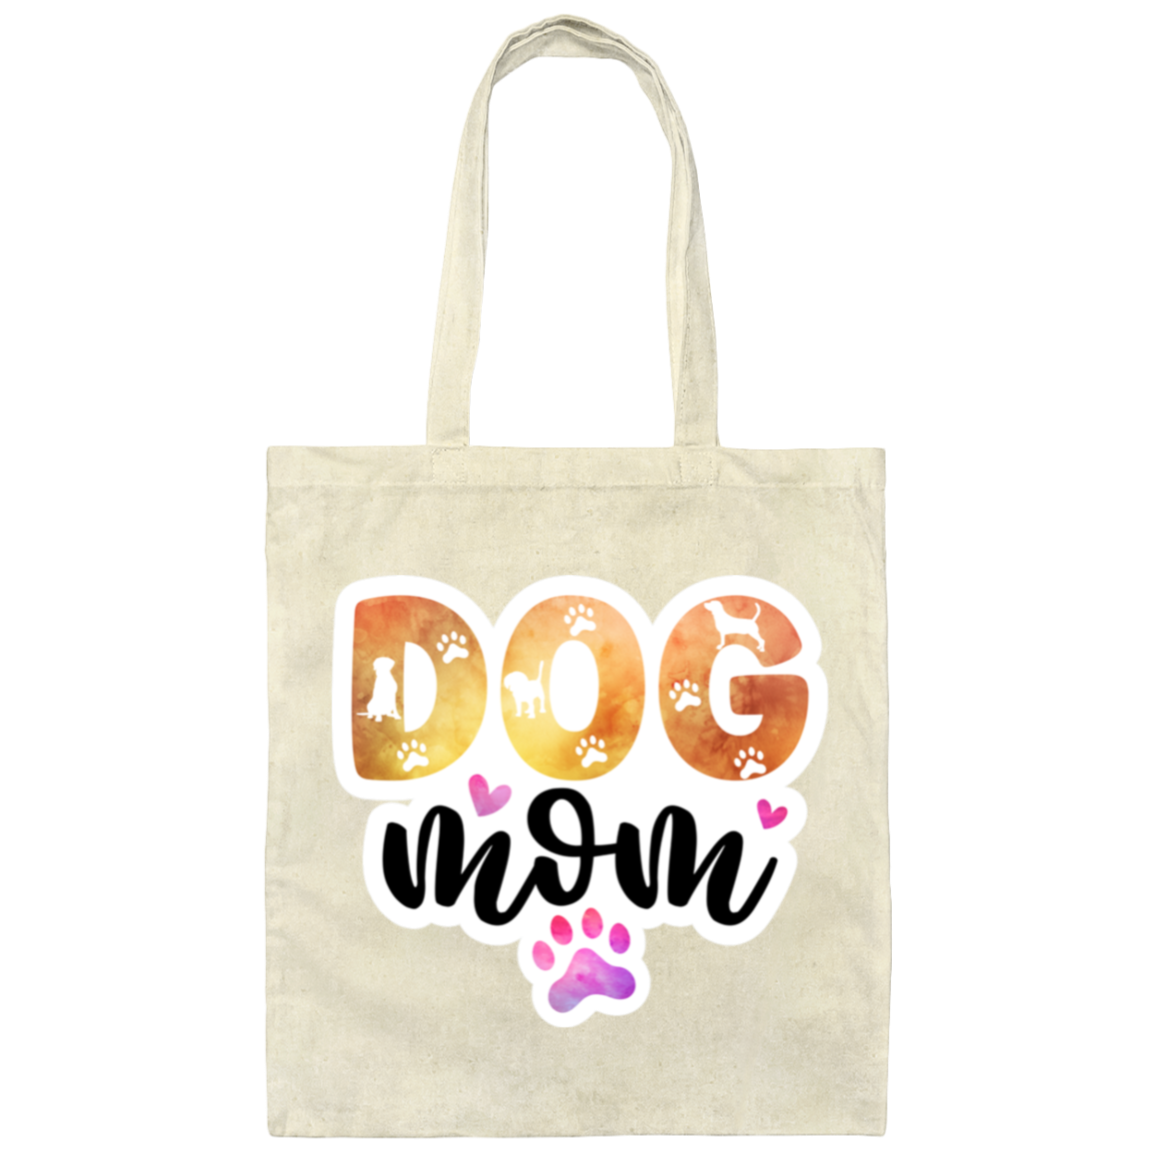 Dog Mom Watercolor Paw Print Canvas Tote Bag